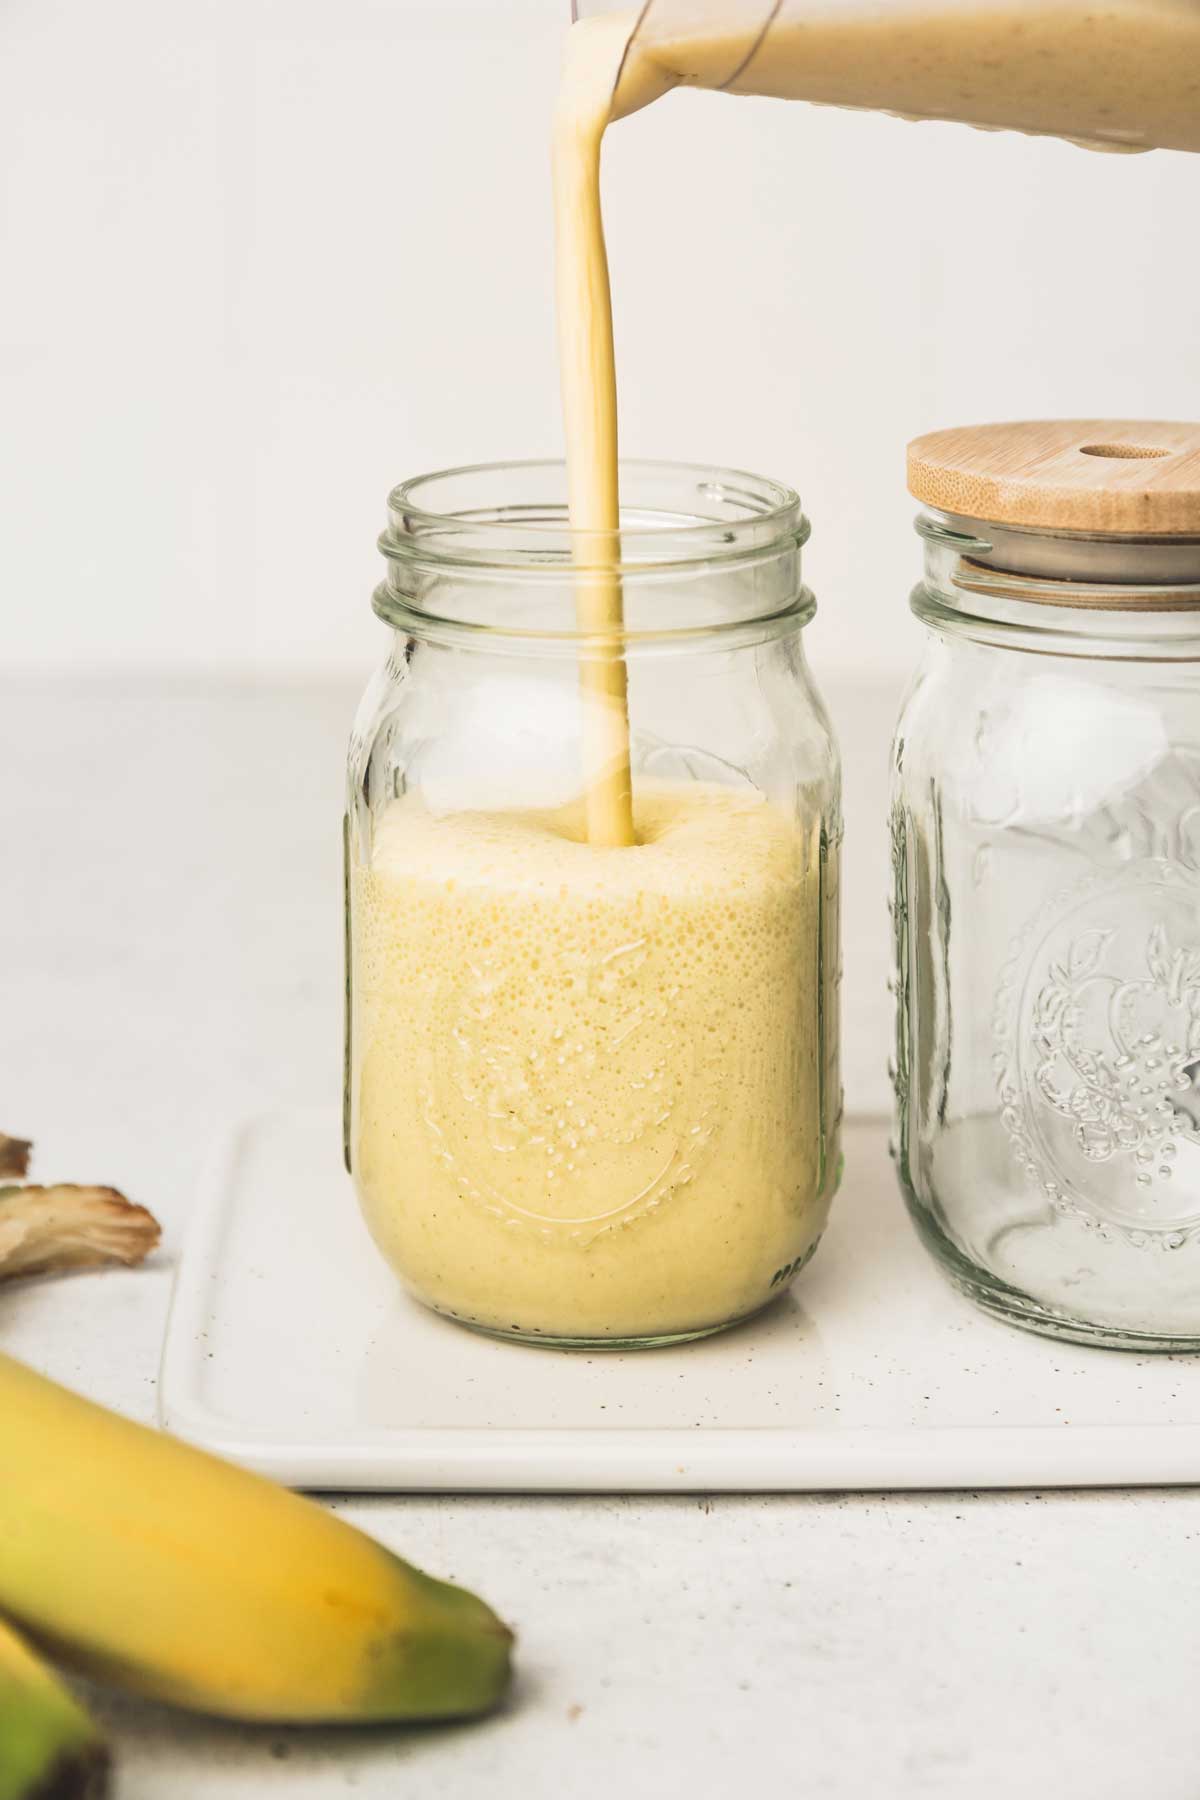 banana milkshake in a glass jar